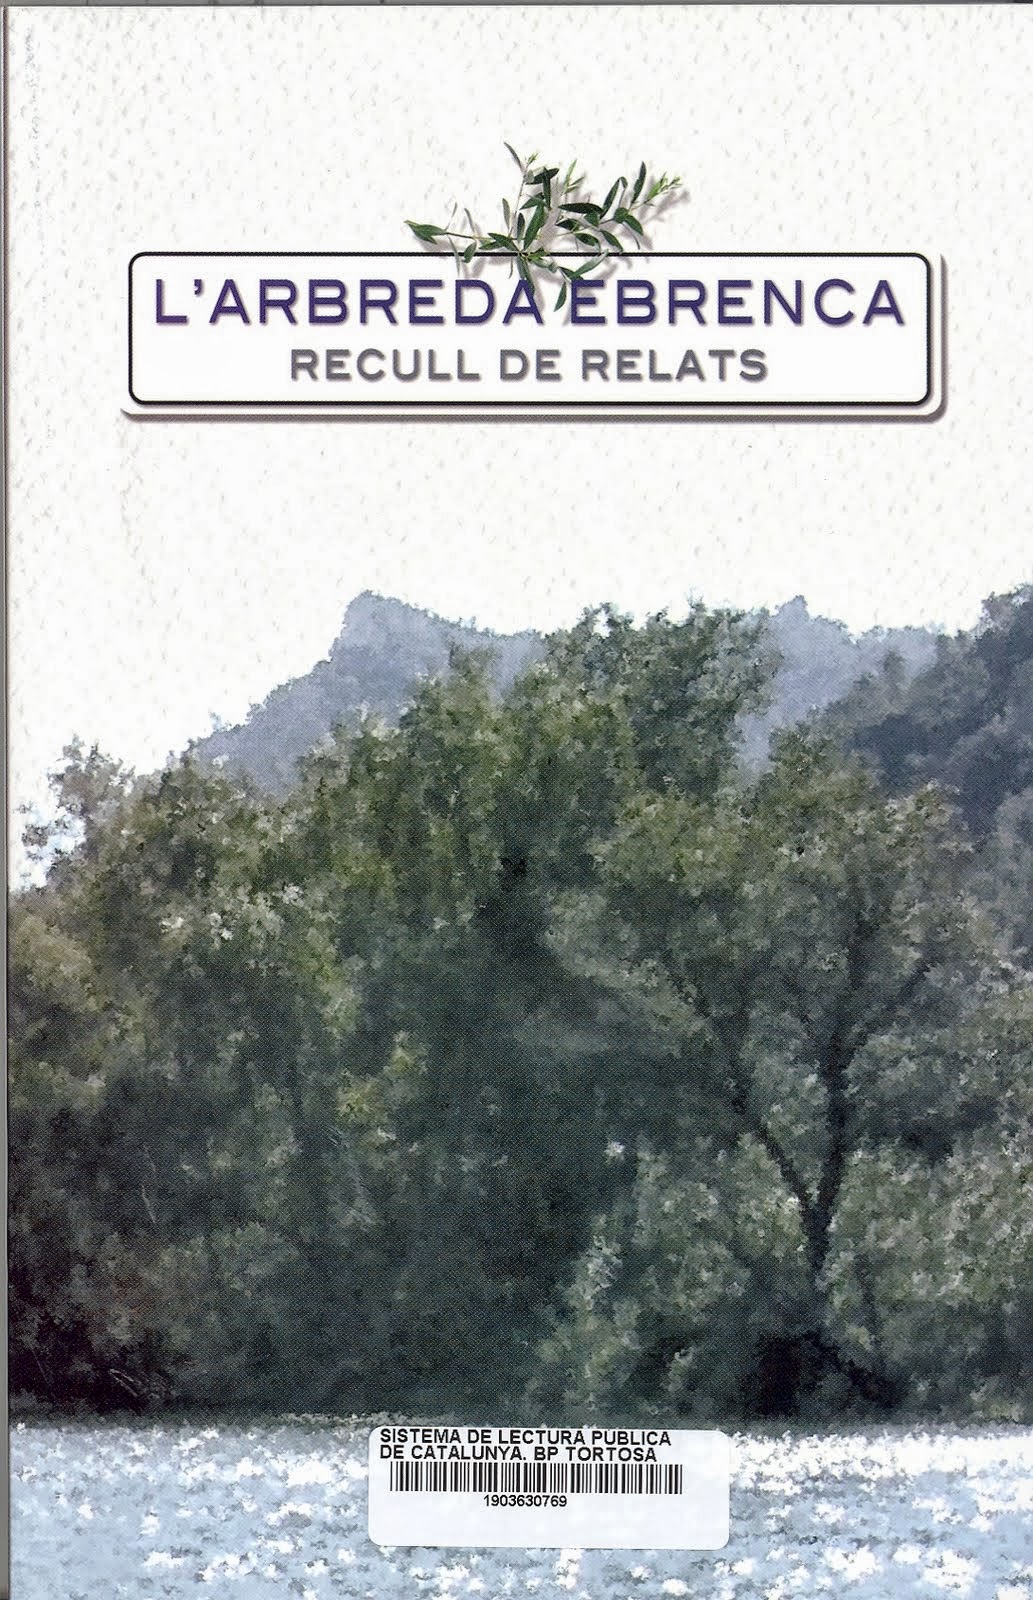 ARBREDA EBRENCA, 2010